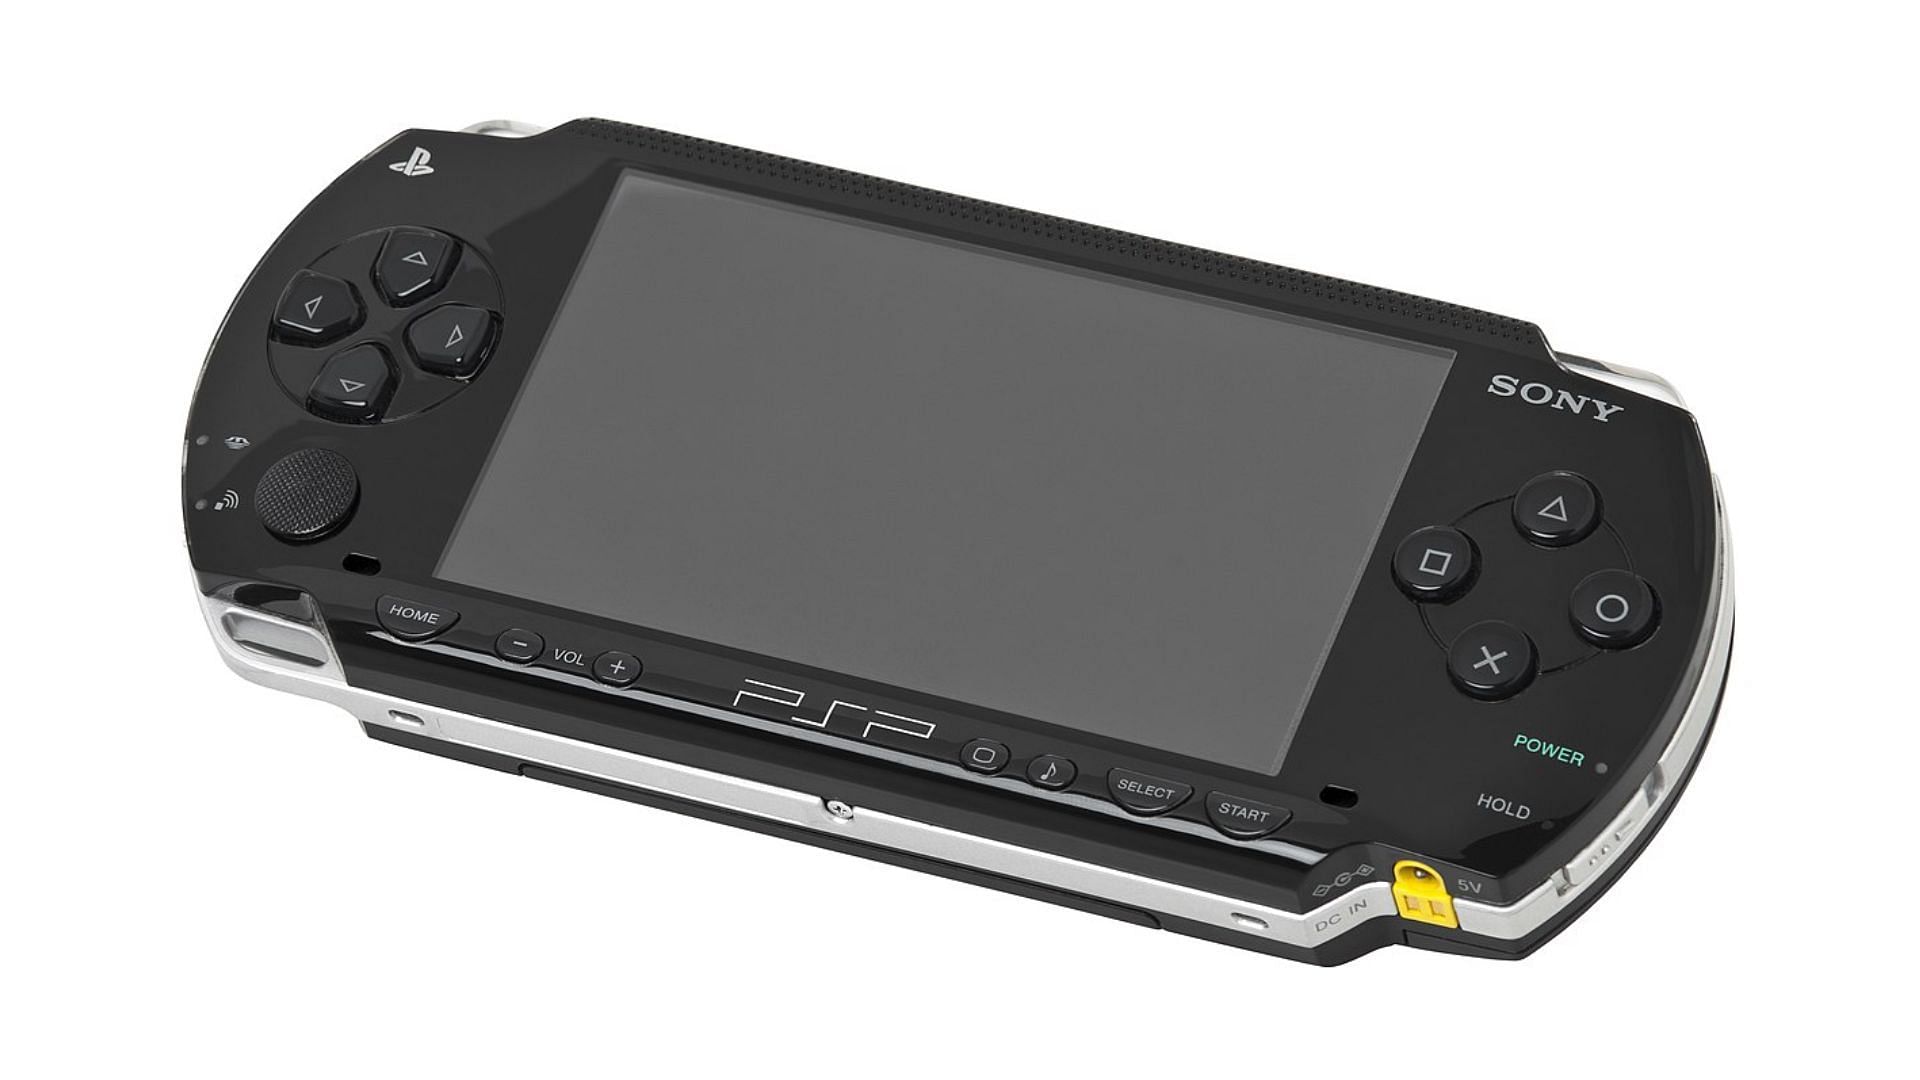 The PlayStation Portable (Image via Sony)